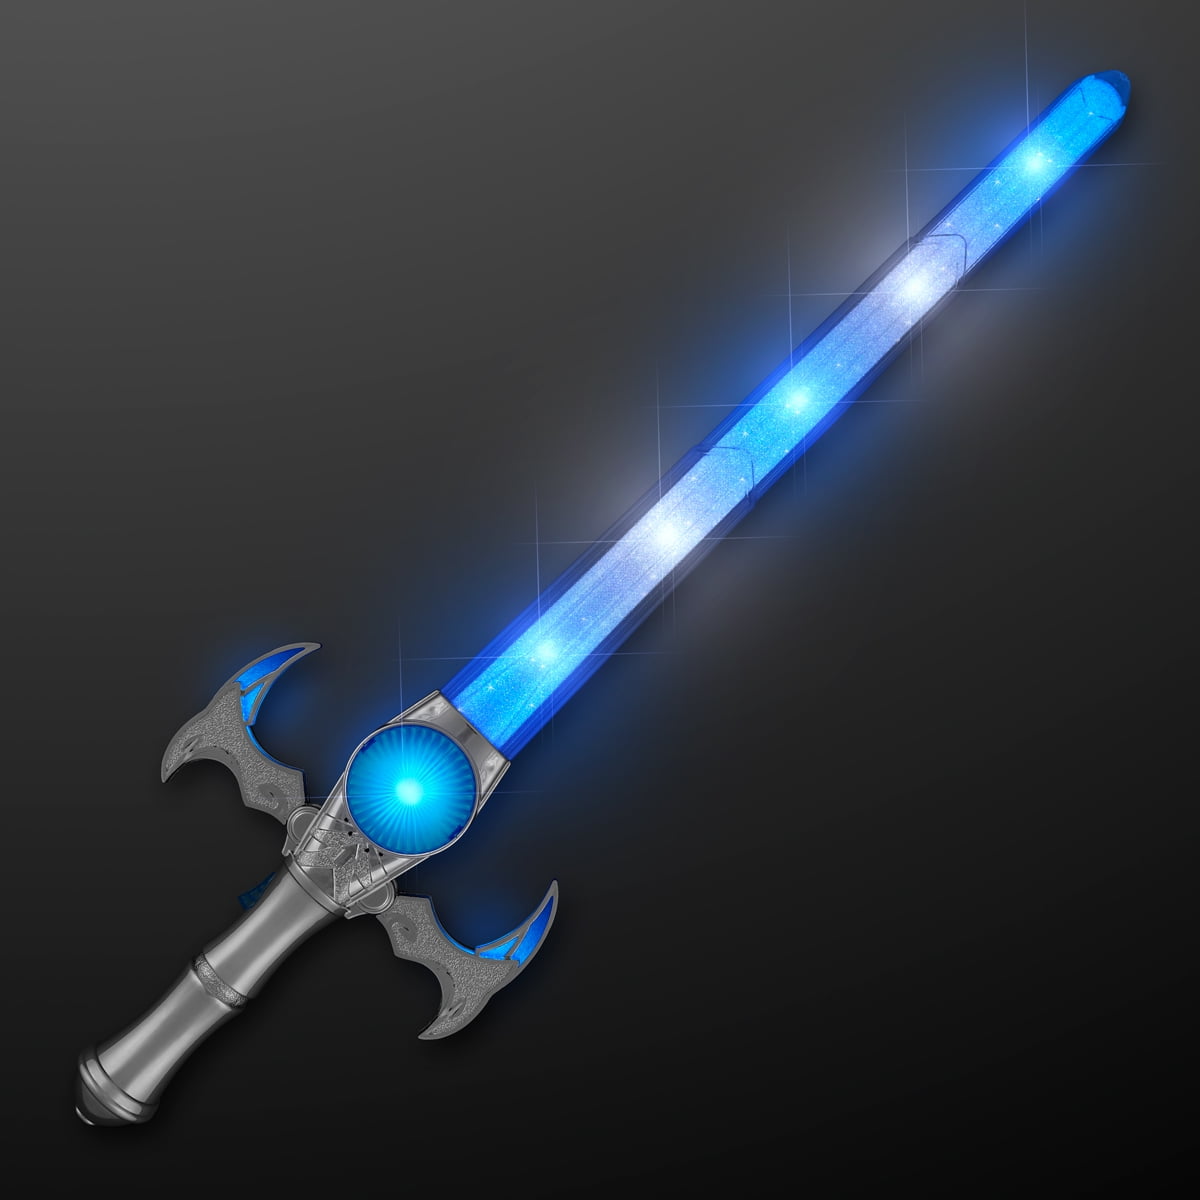 2 BLUE LED LIGHT SABER SWORDS toys pretend play kids NEW SWORD LIGHTUP toy boys 